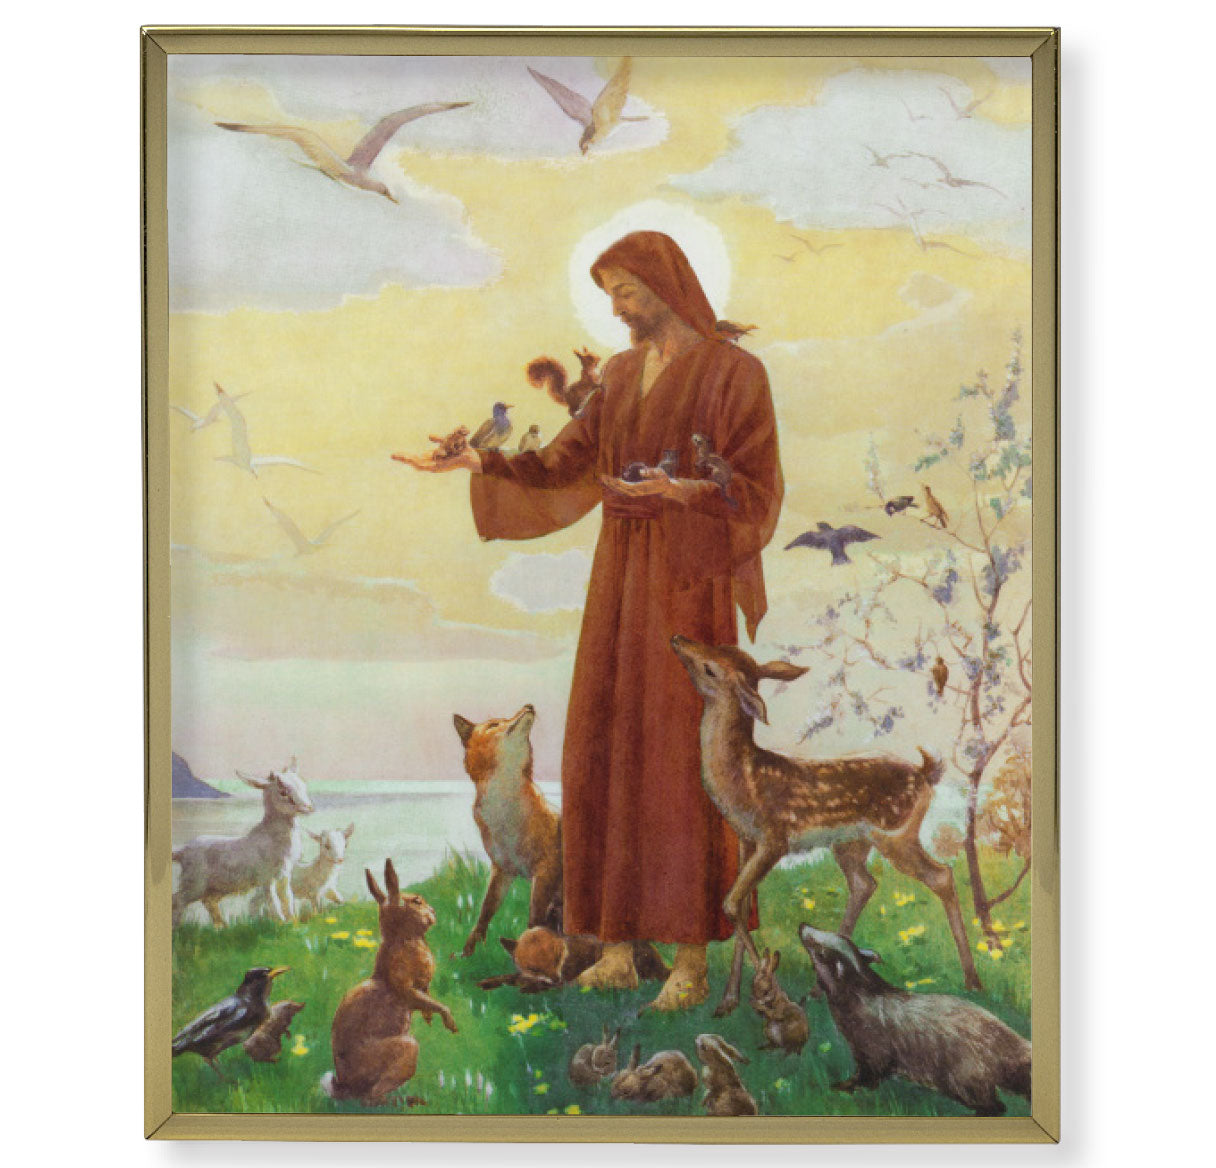 St. Francis Picture Framed Plaque, Large, Gold Plaque Frame